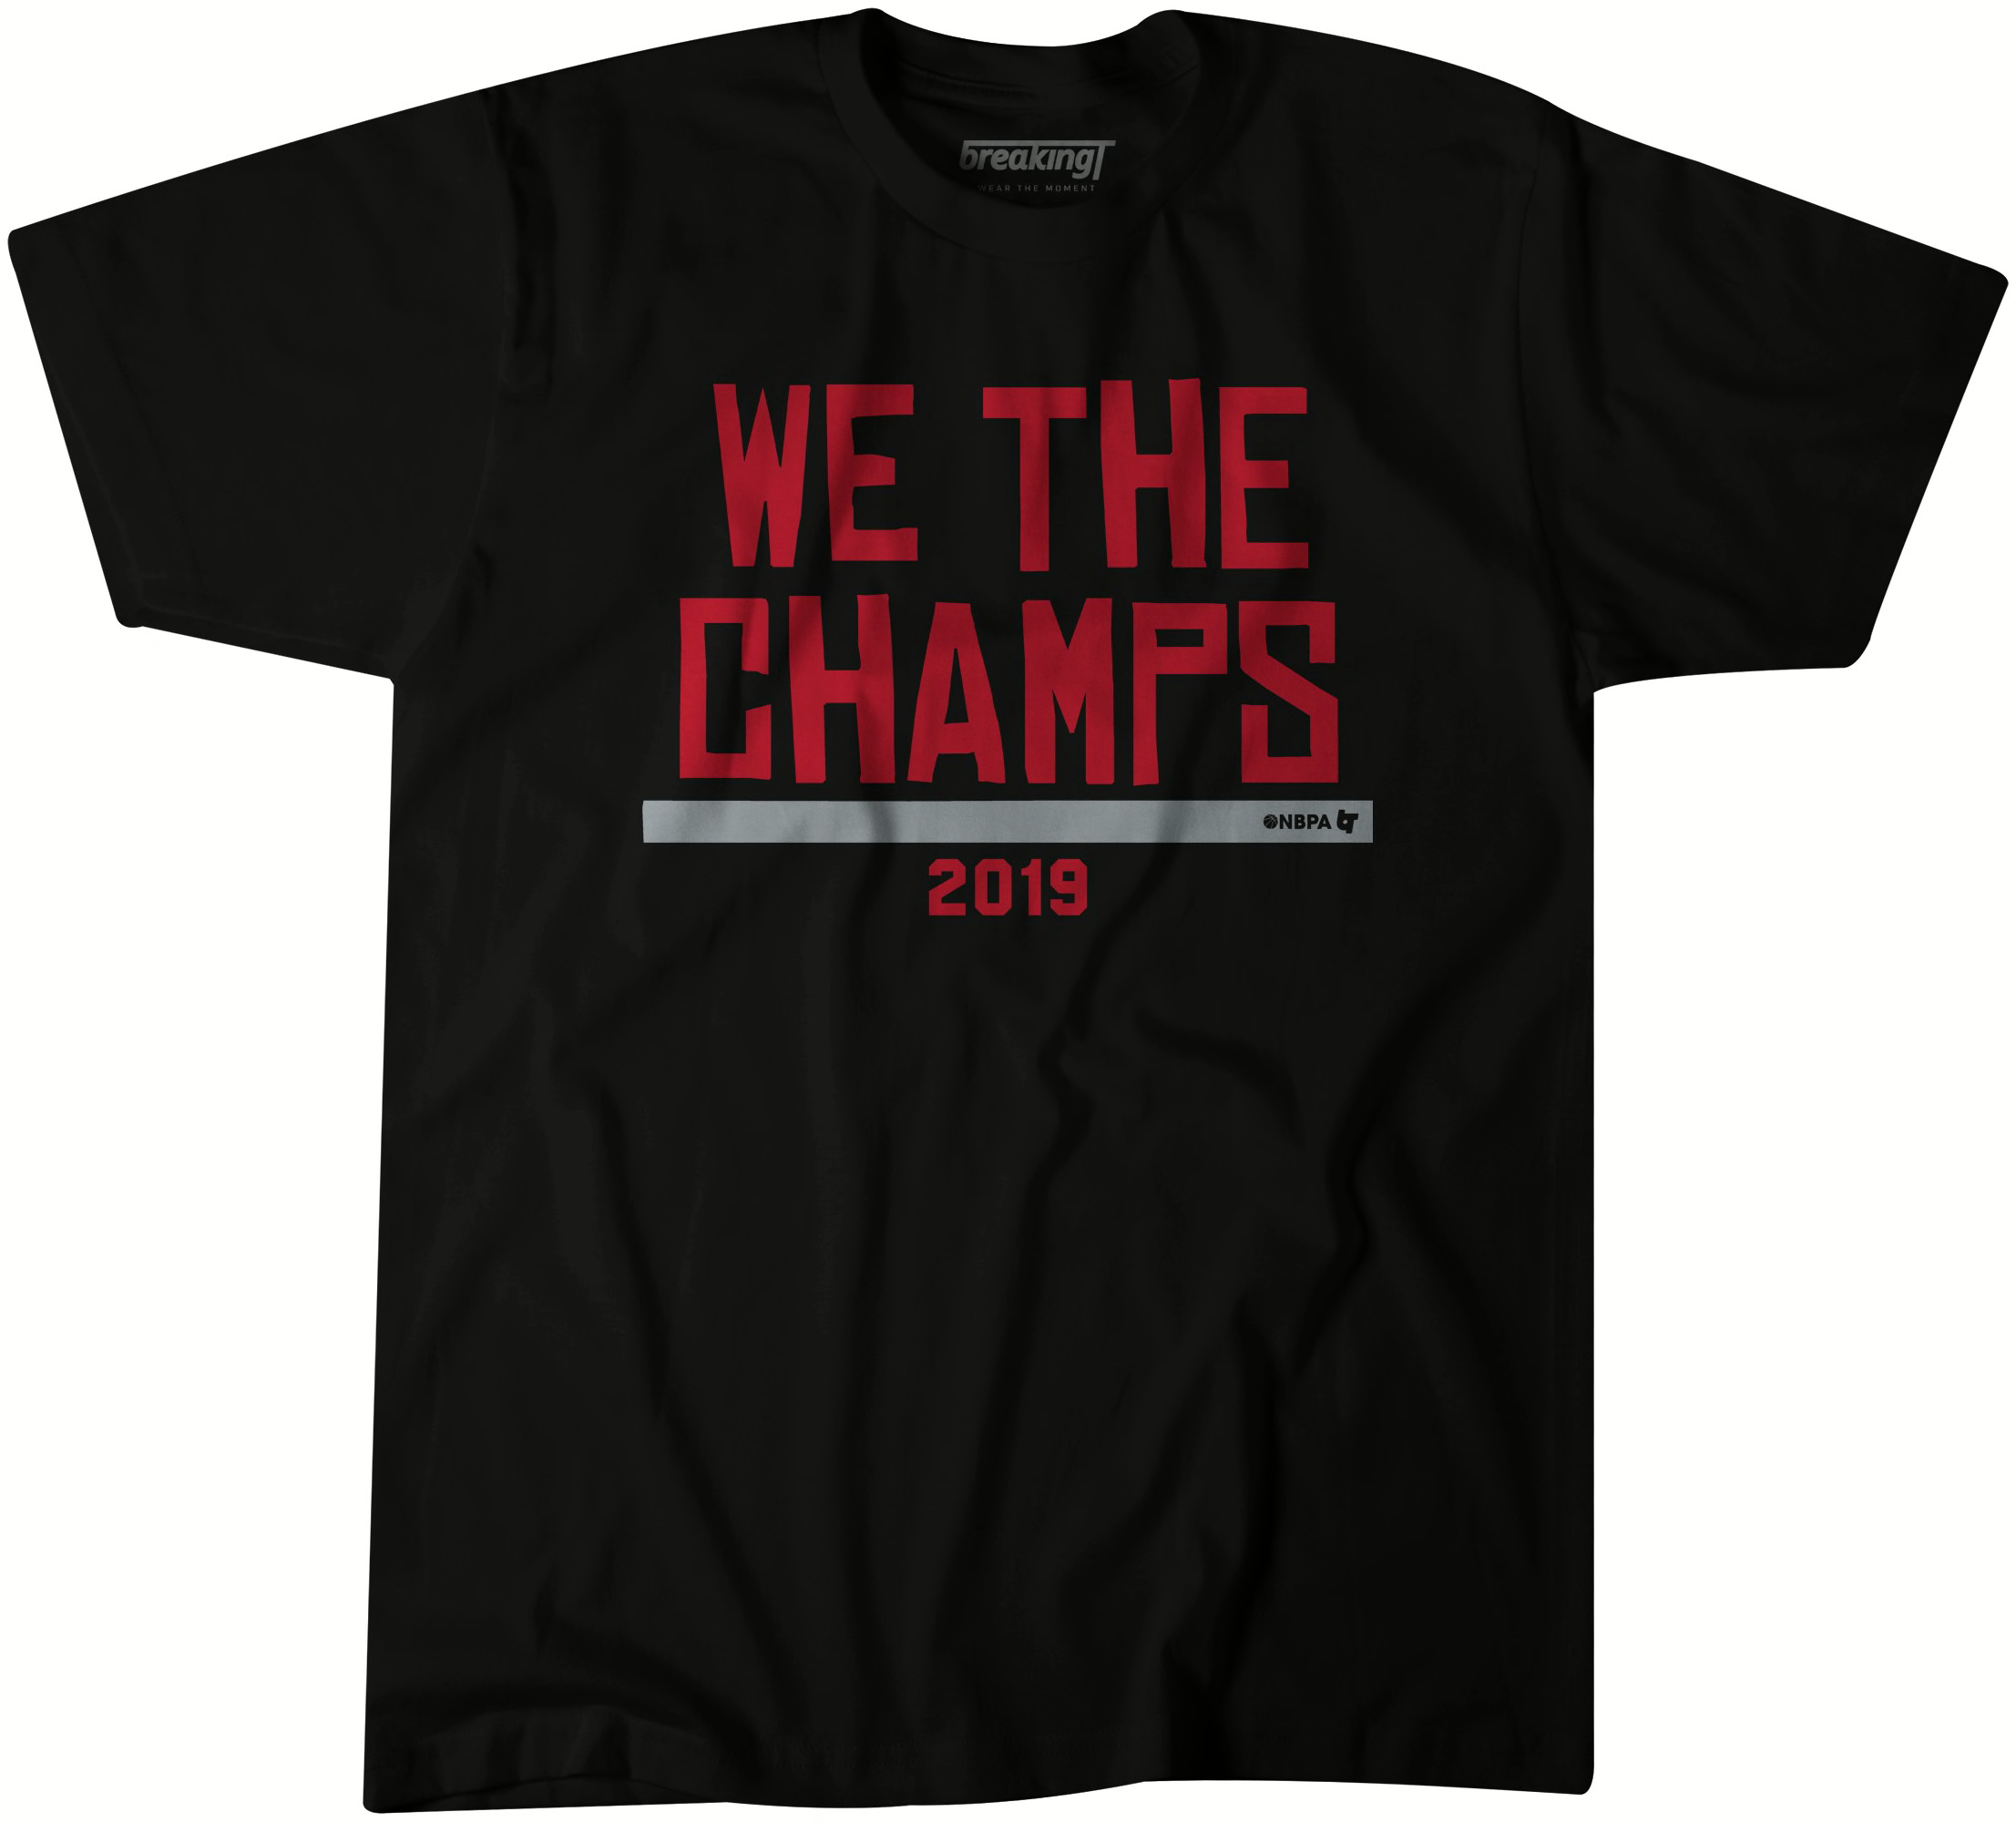 Toronto Raptors north over everything NBA champions 2019 shirt